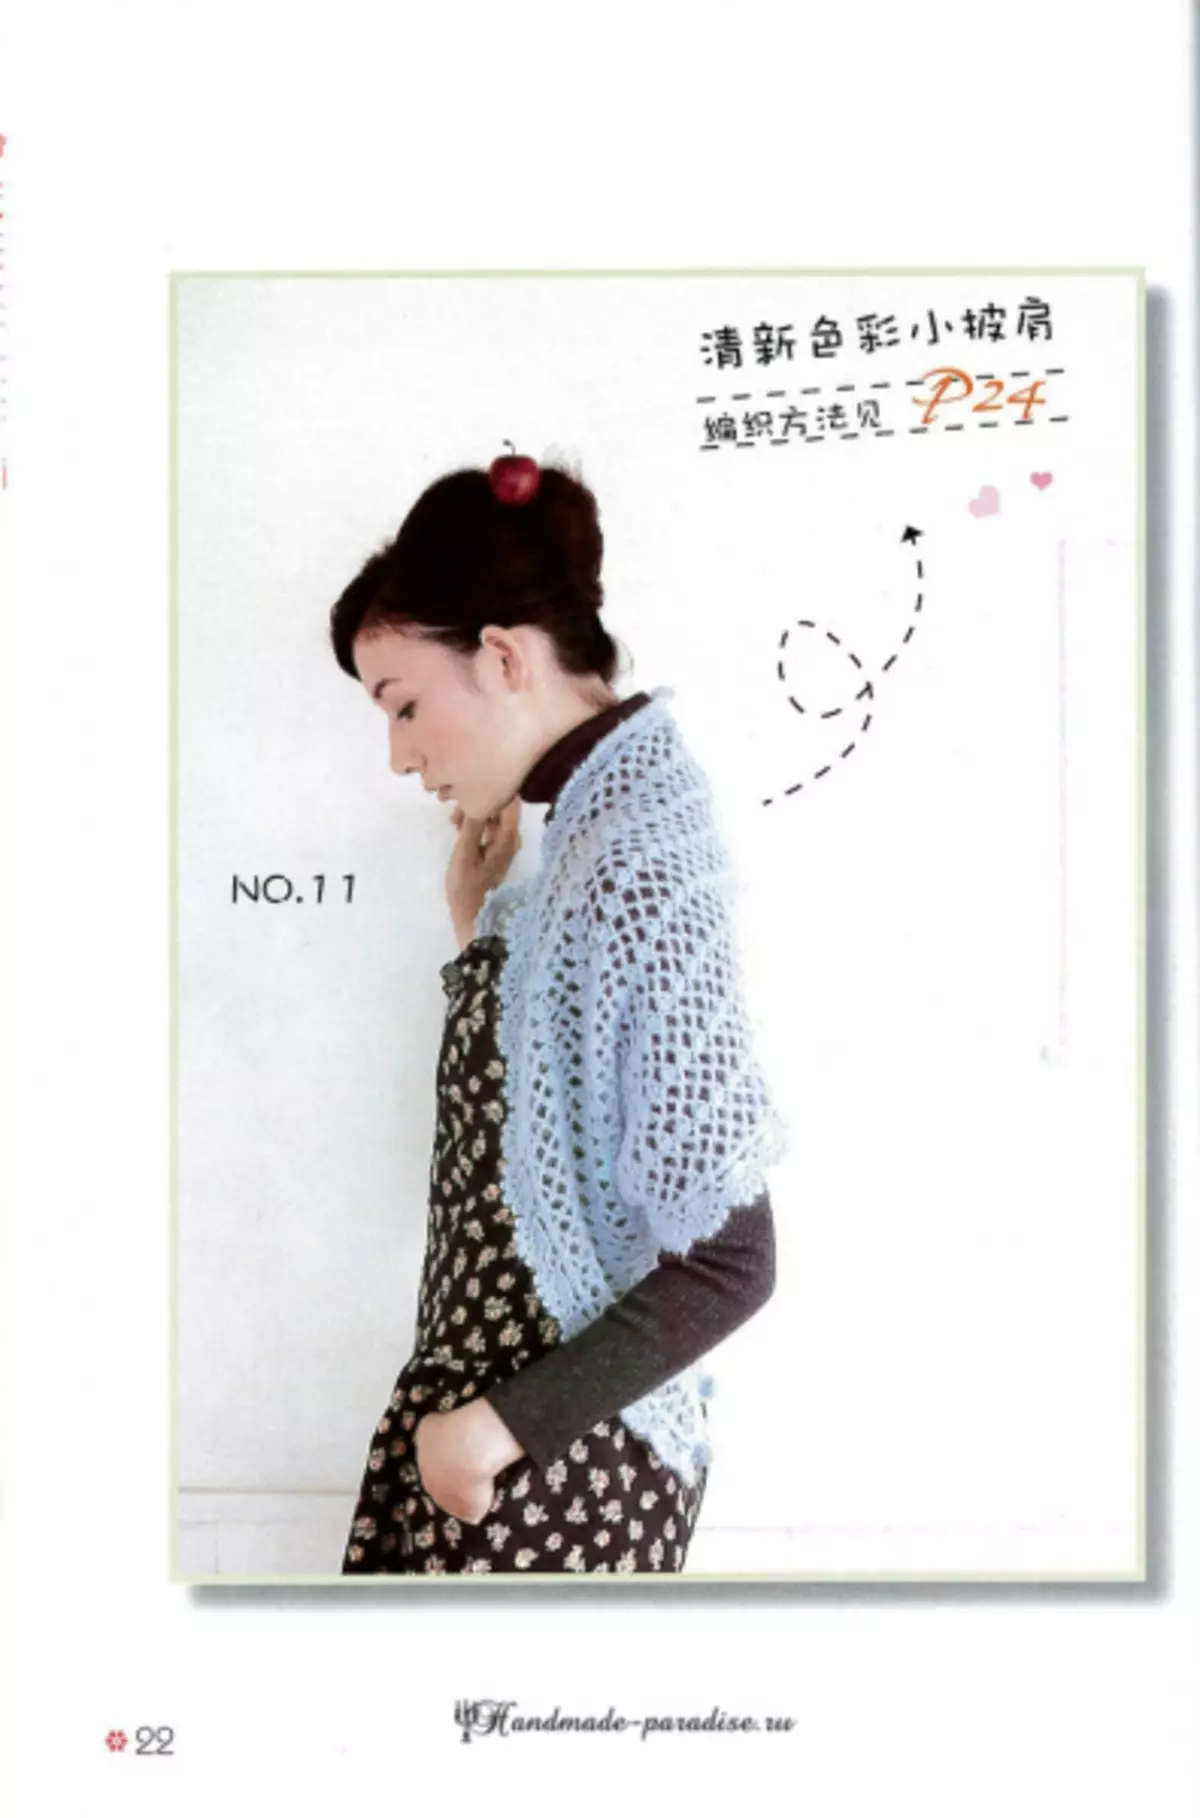 Shawli, פונצ'ו וכפפים במגזין יפני עם תוכניות